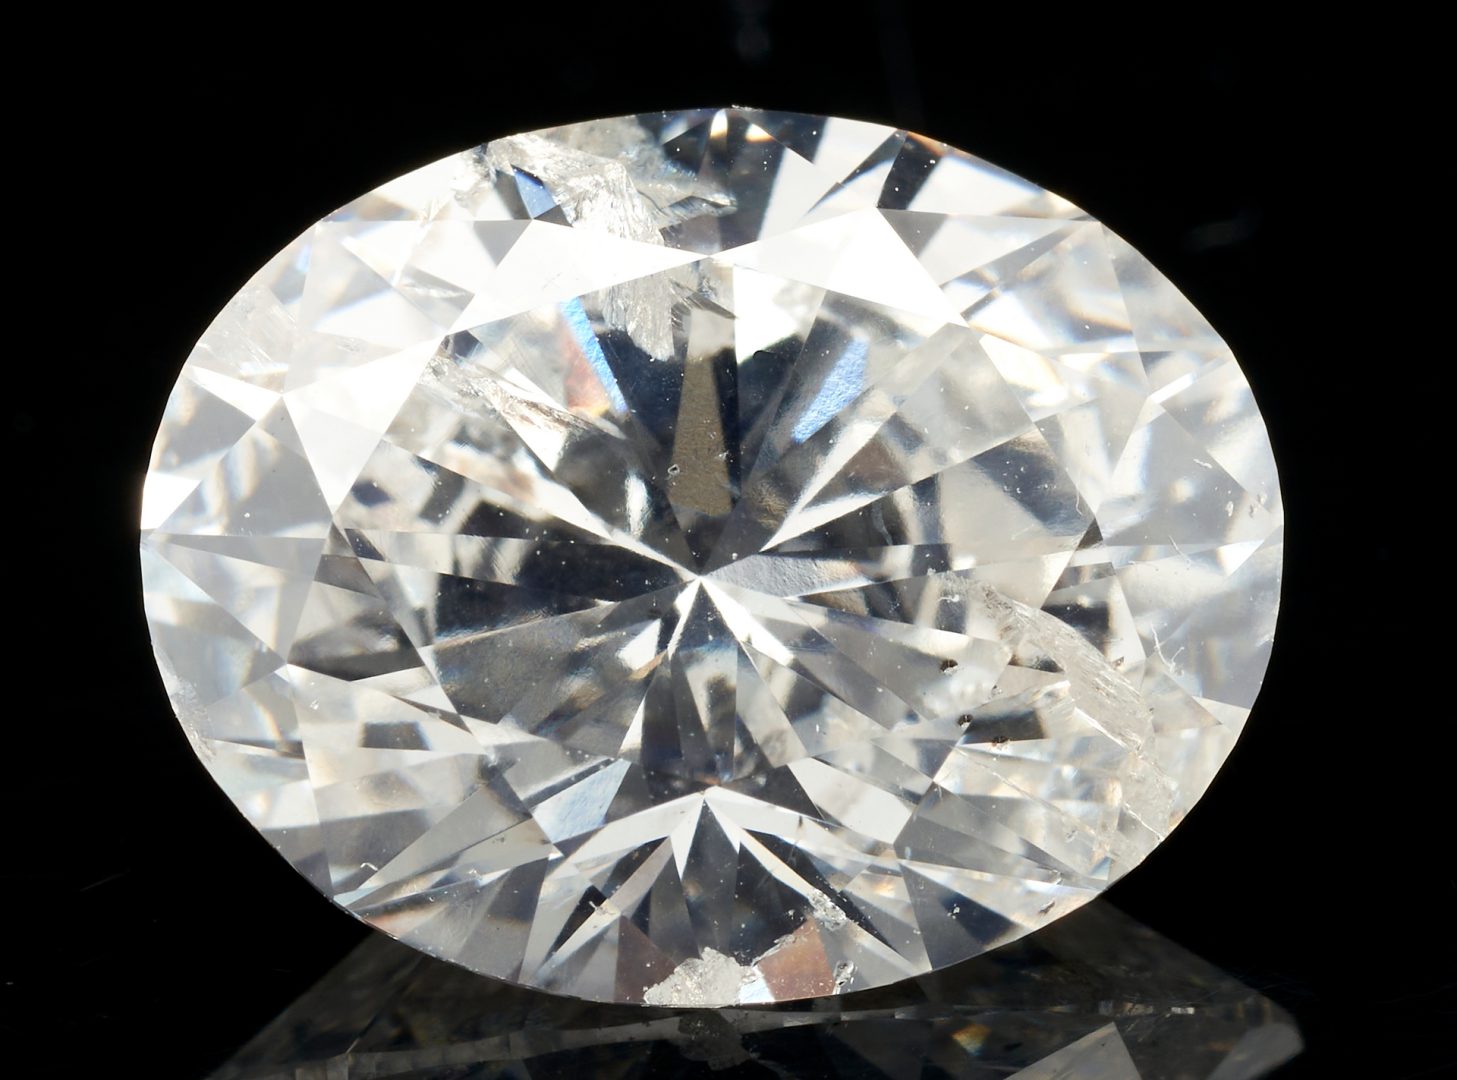 Lot 31: 4.46 Carat Oval Brilliant Diamond Ring, GIA Report